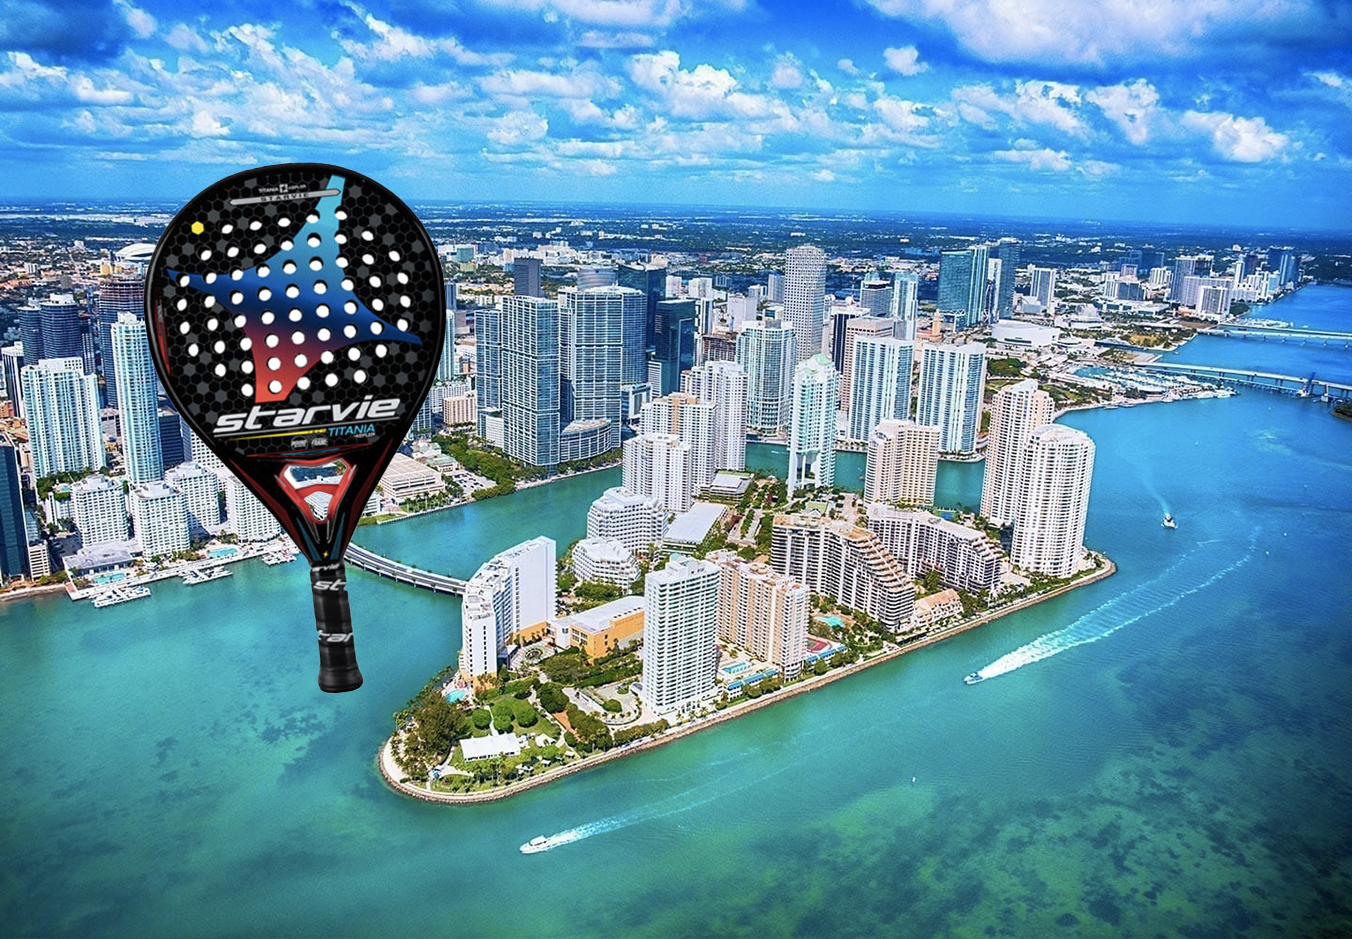 Where to play Padel at Miami?